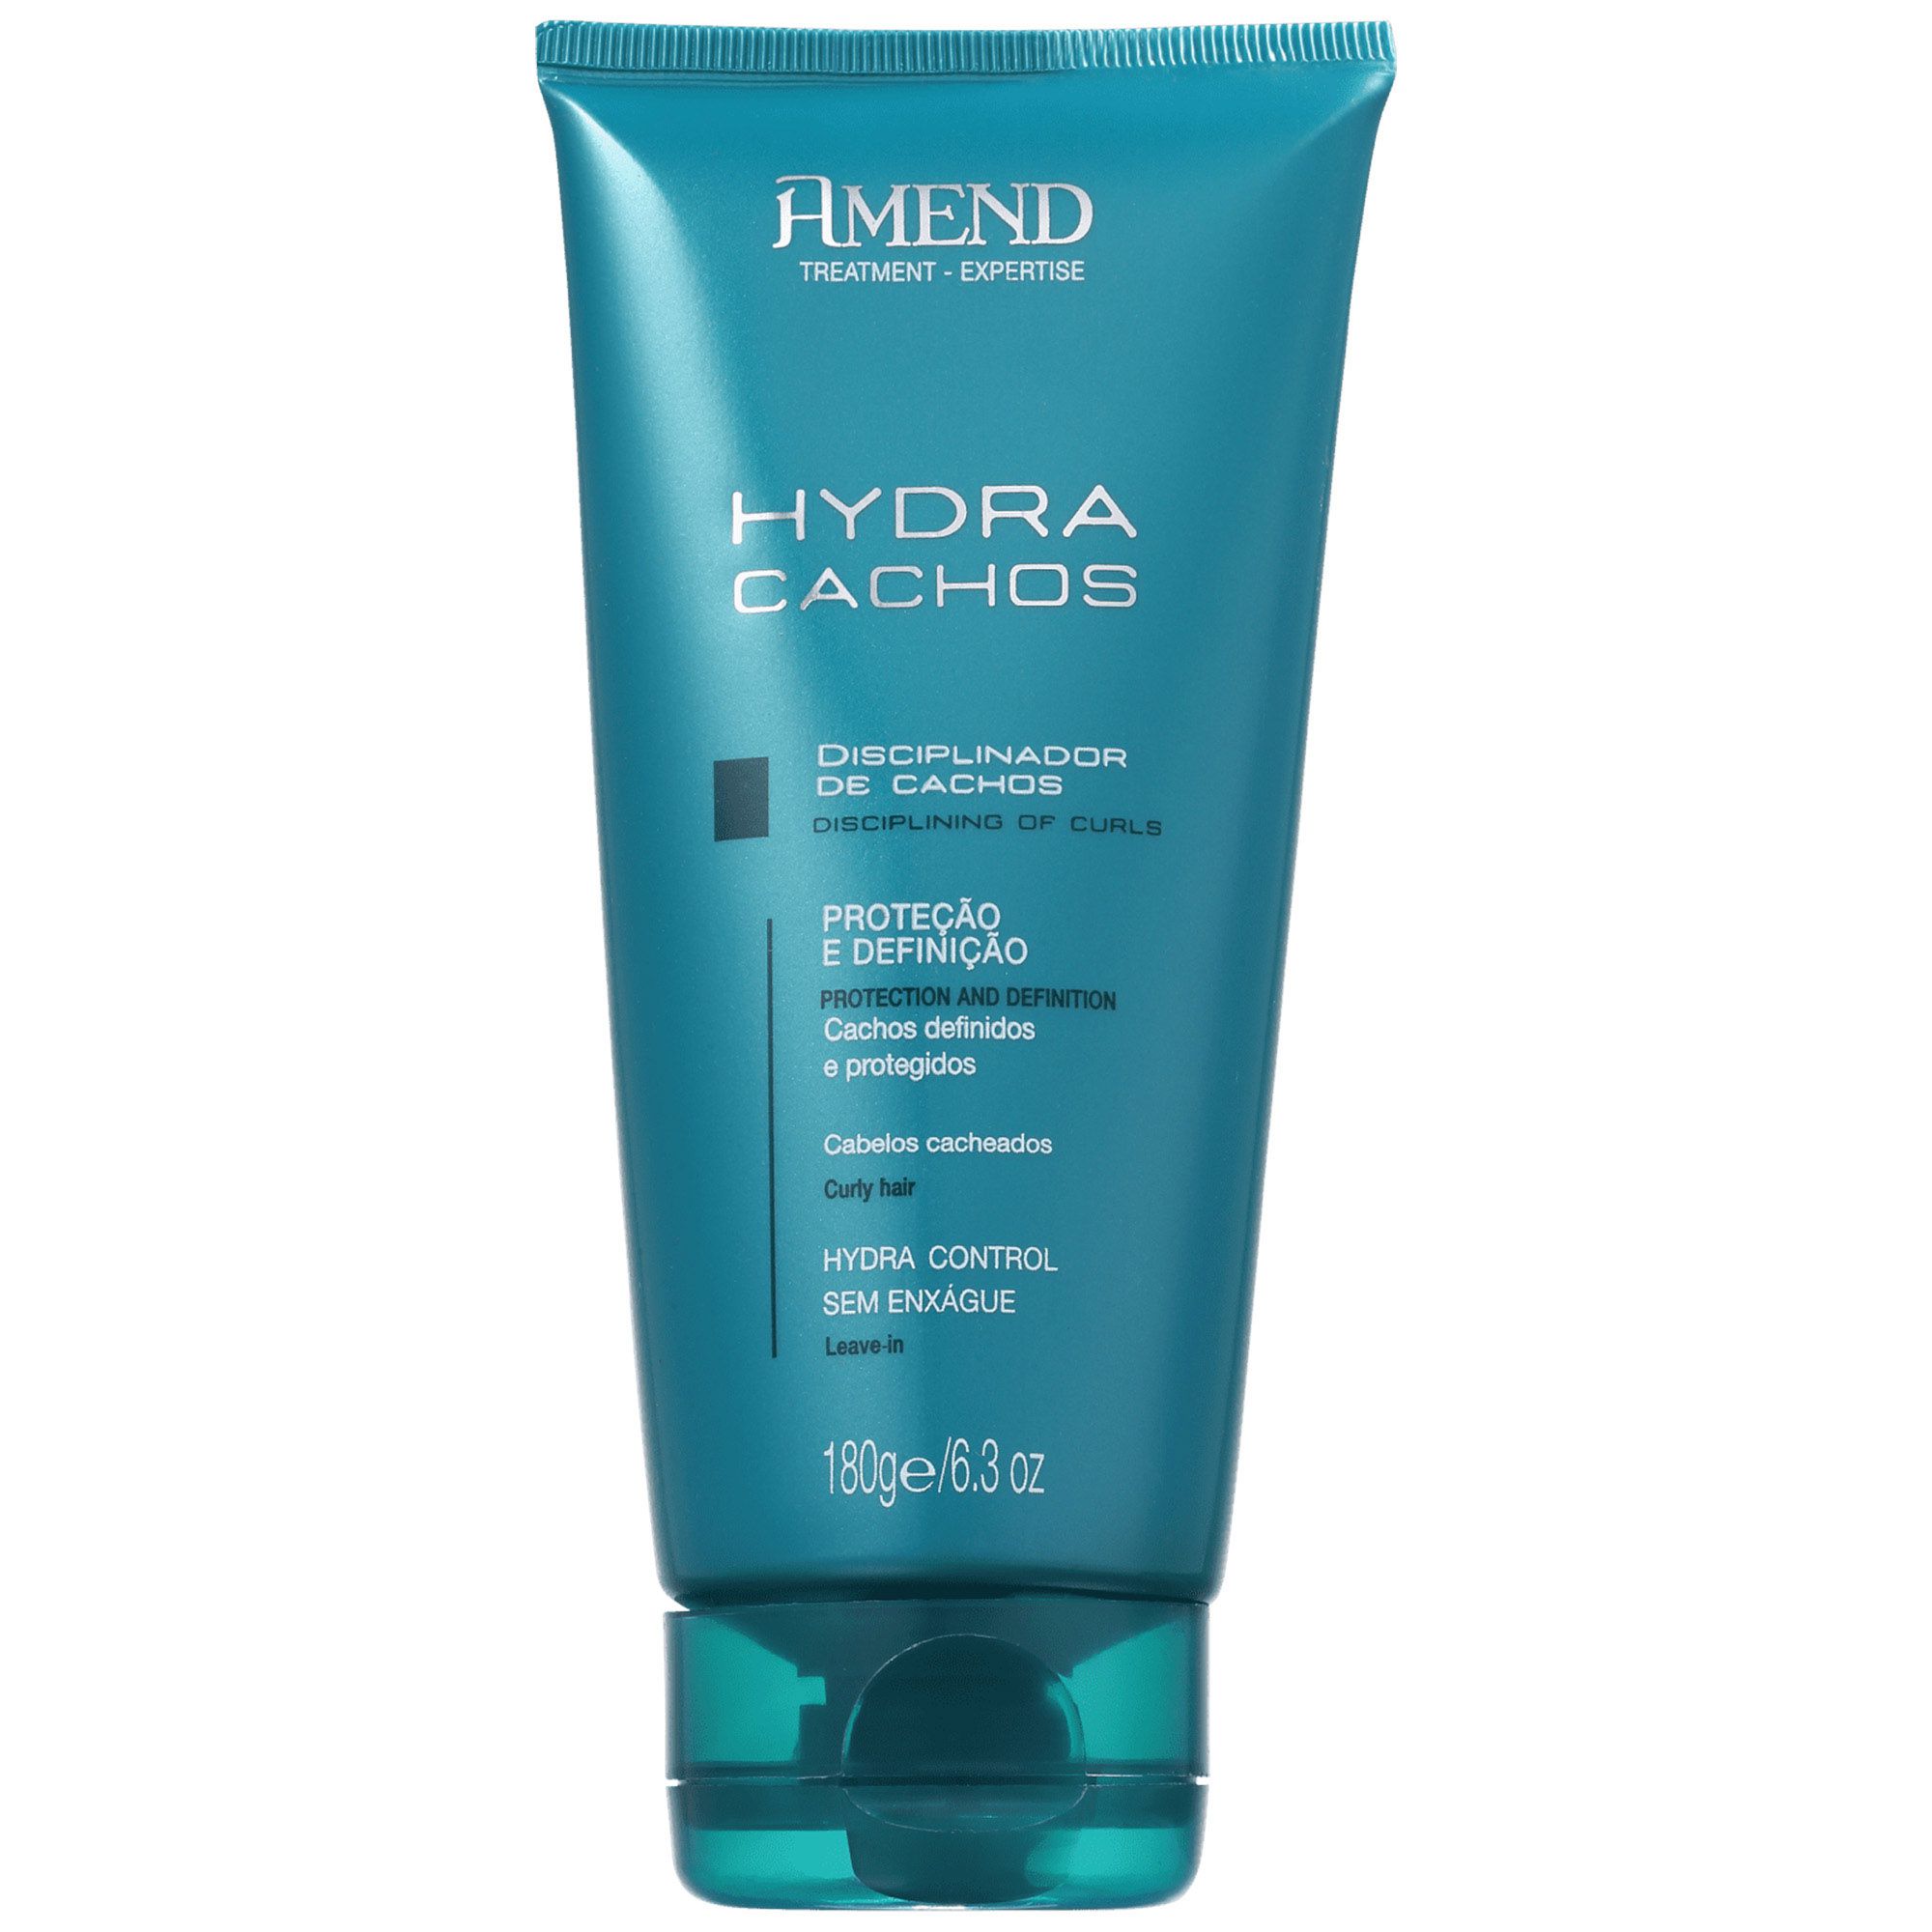 Combo Amend Hydra Cachos Shampoo  250ml + Condicionador 250ml + Diciplinador 180g + Mascara 300g - Foto 4